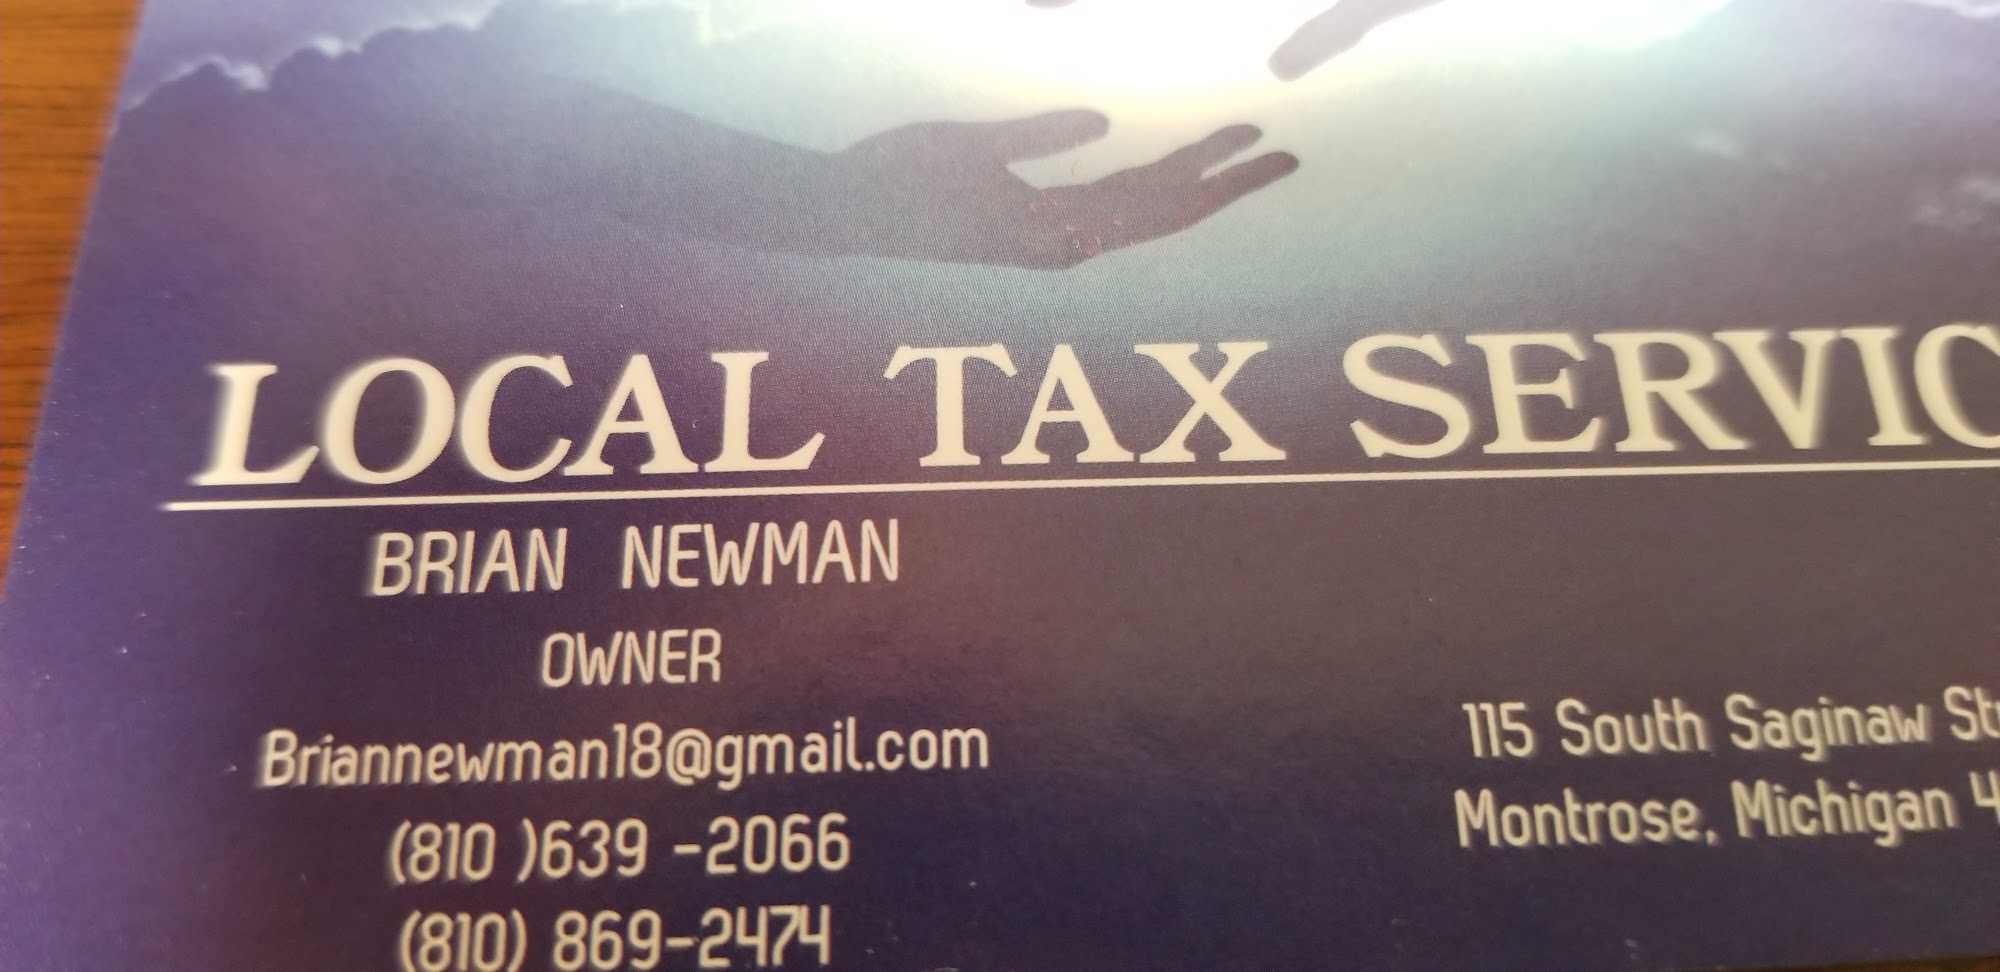 Local Tax Services Inc 115 S Saginaw St, Montrose Michigan 48457